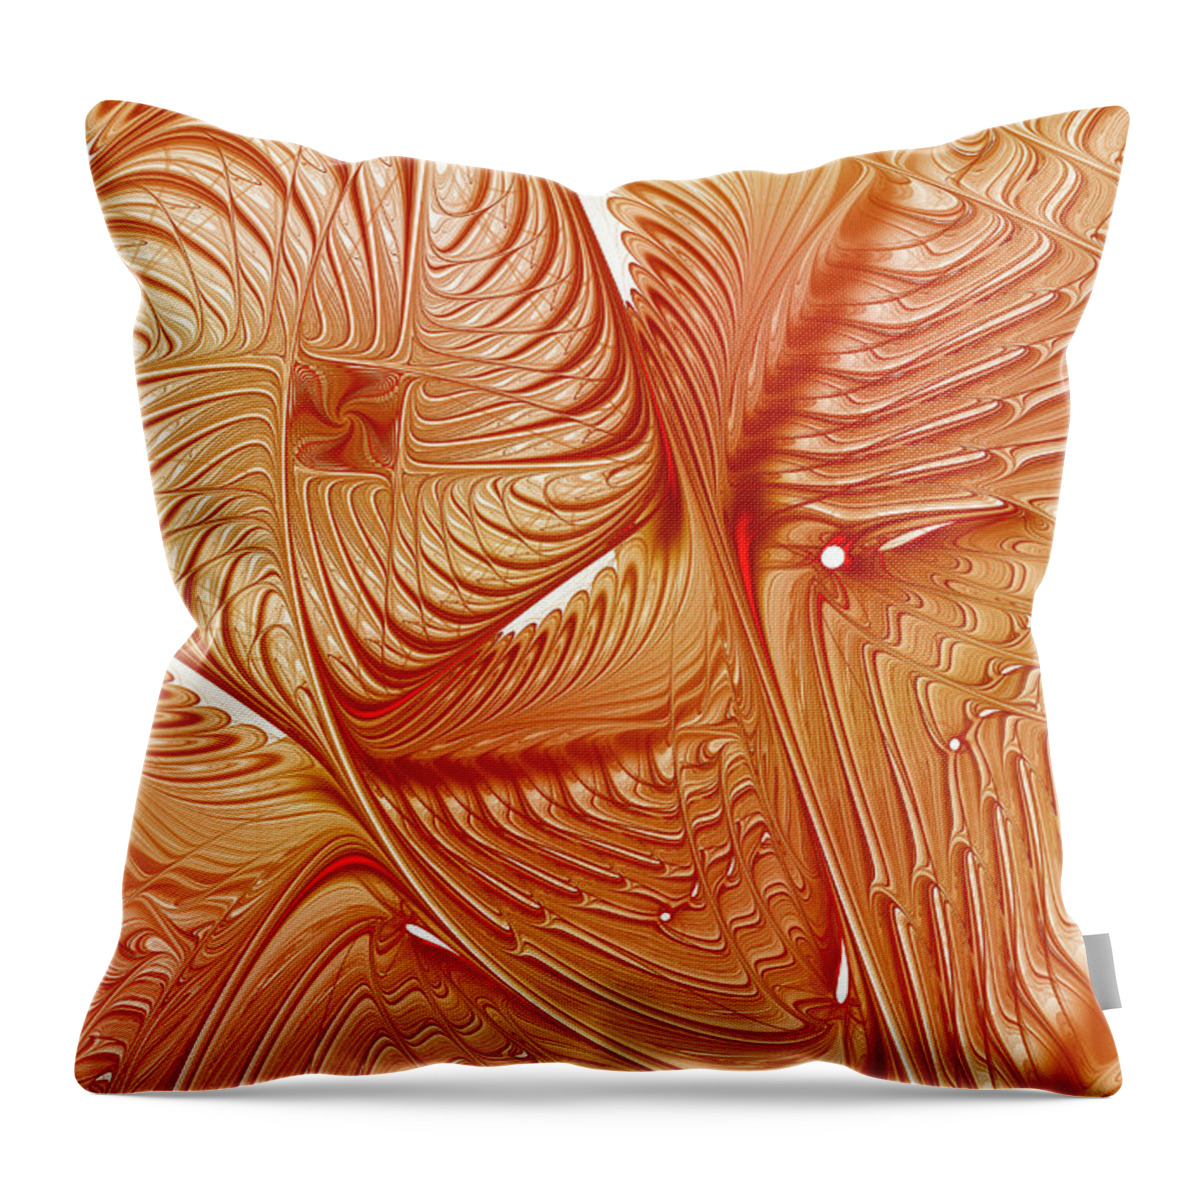 Art Throw Pillow featuring the digital art Zenith by Jeff Iverson